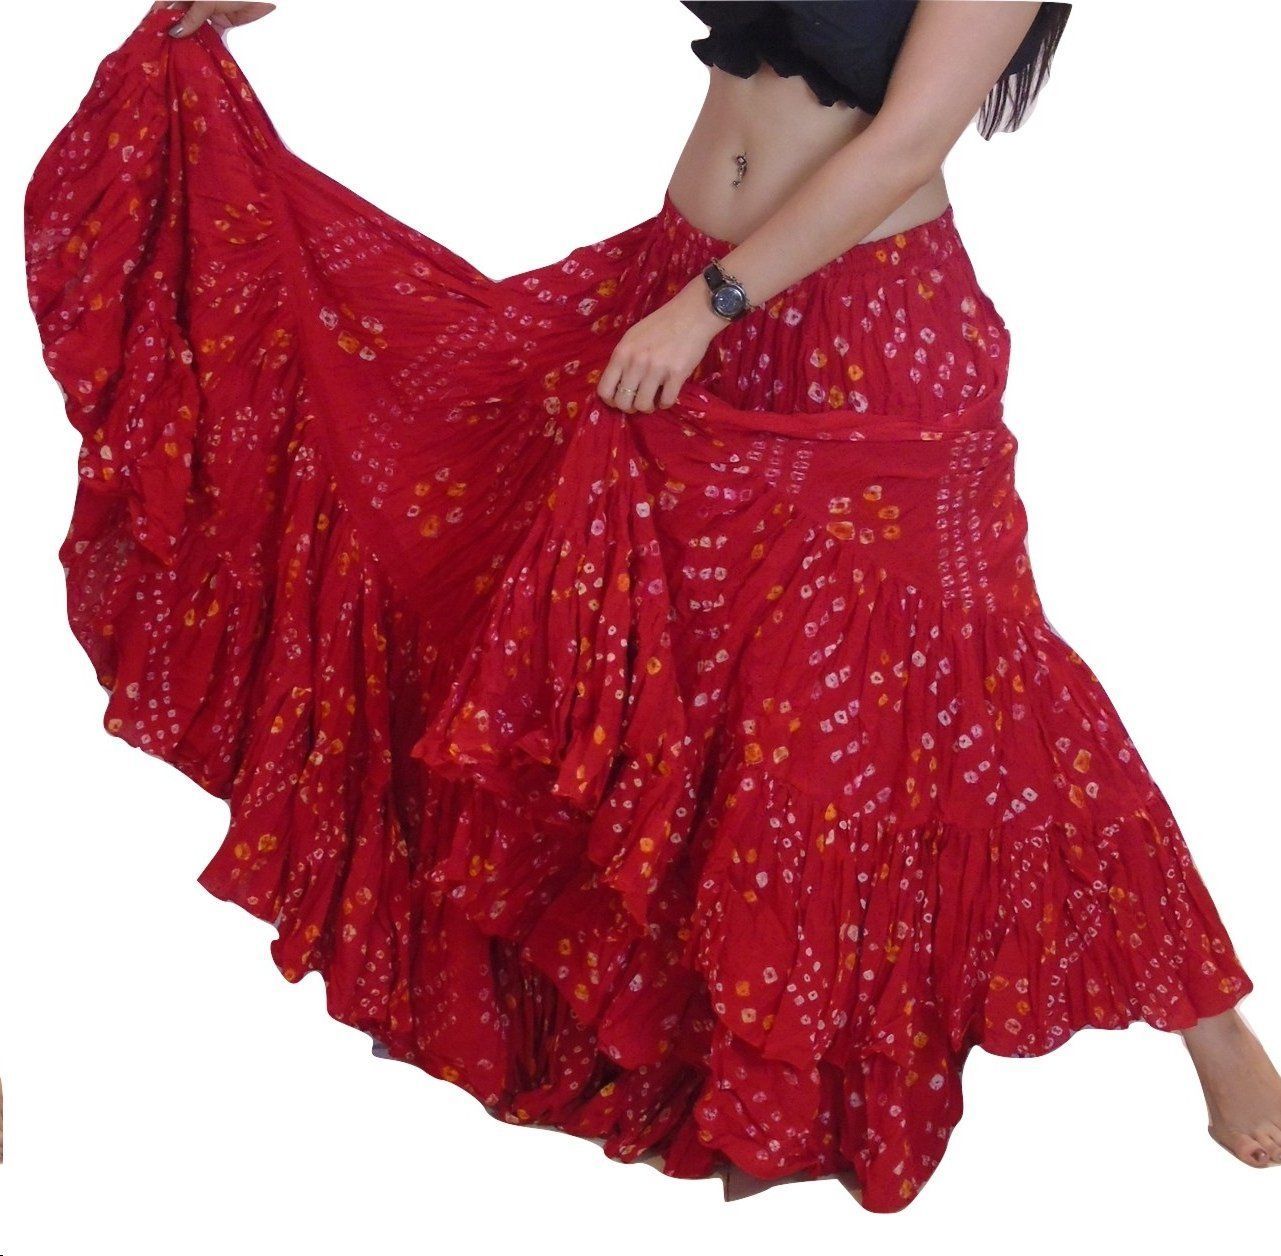 new red polka dot tribal gypsy skirt 25yards - in stock KEVGBFX